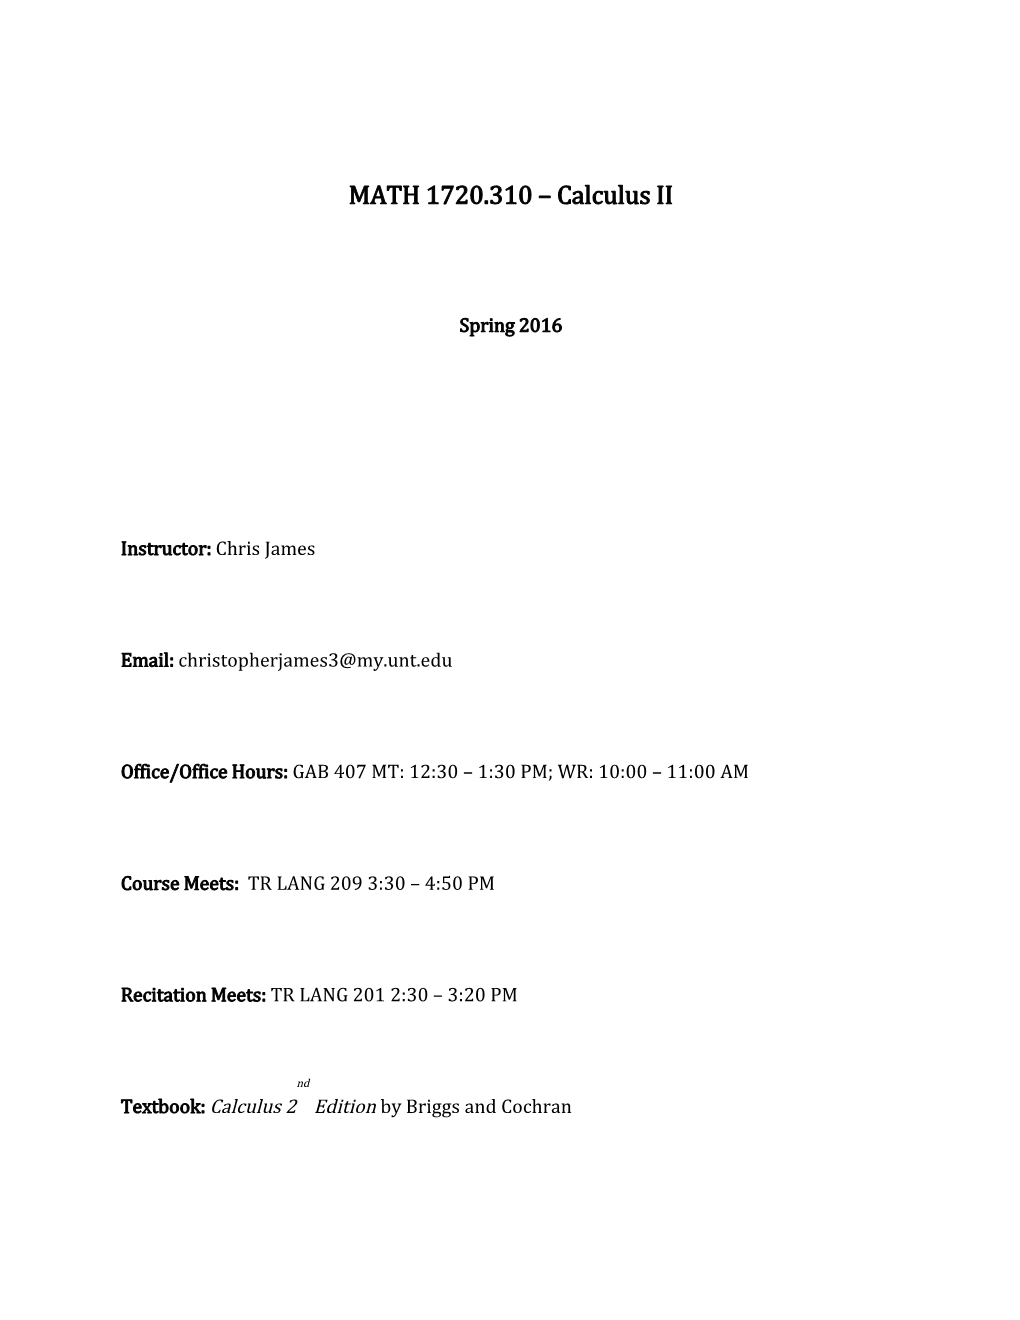 MATH 1720.310 Calculus II